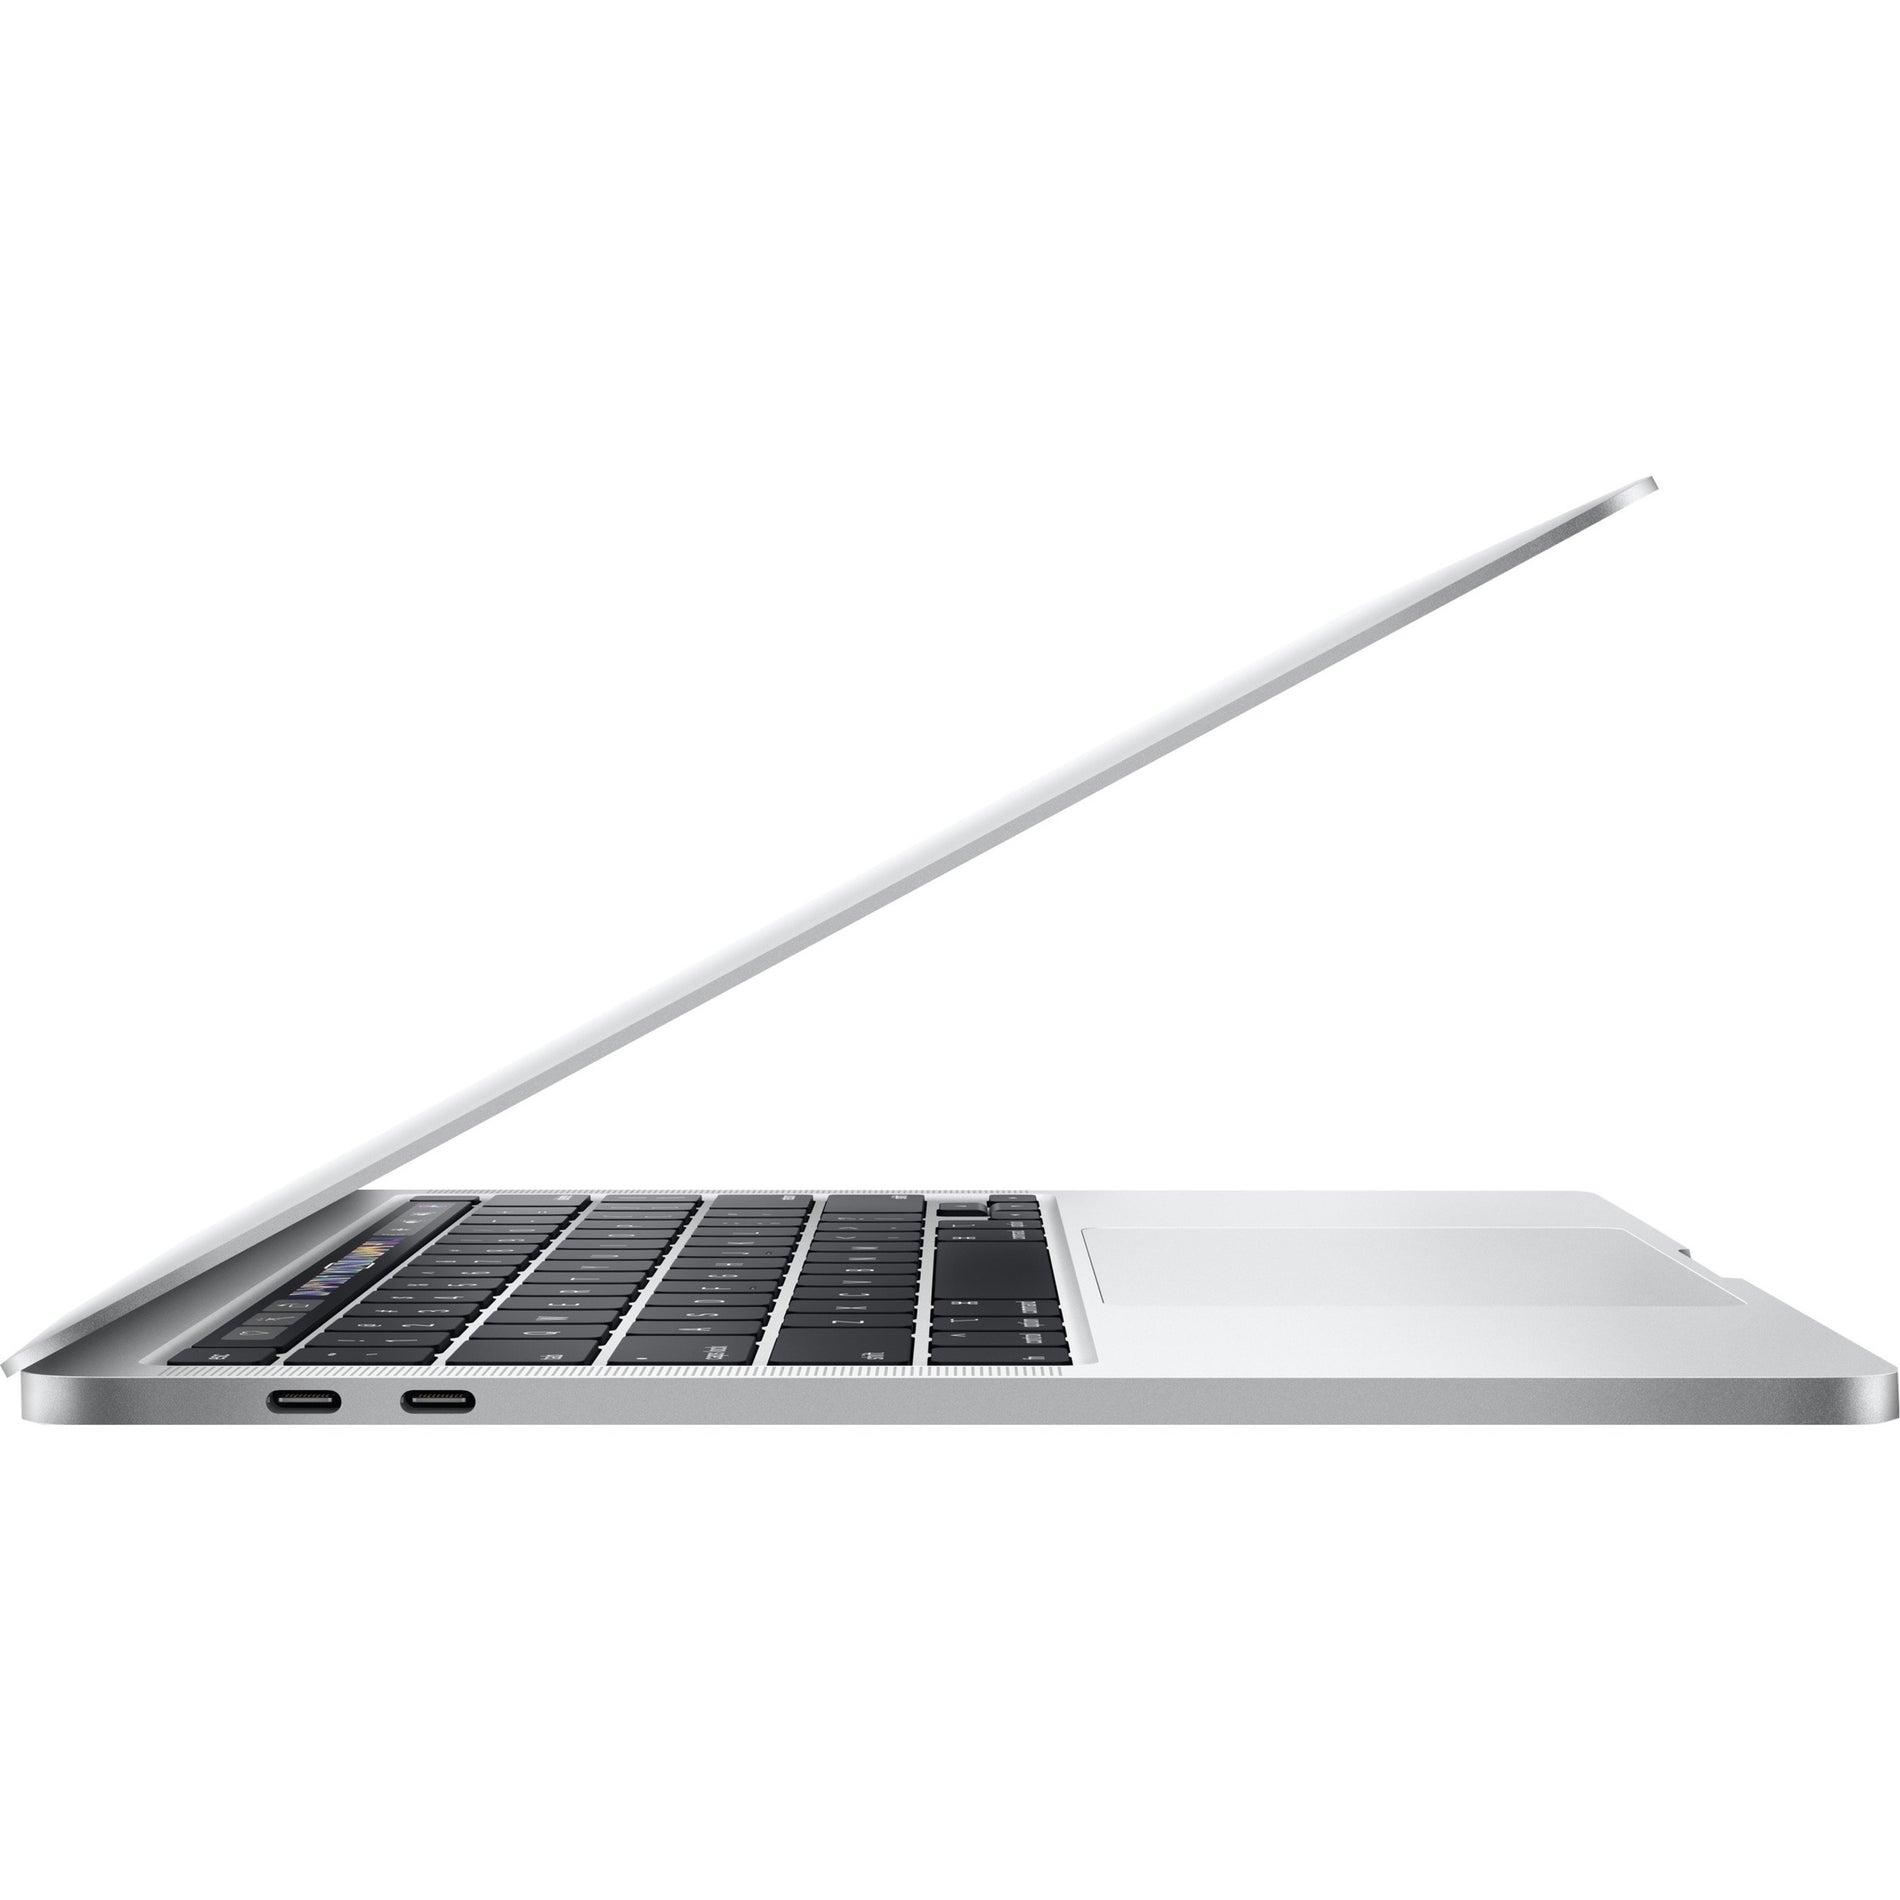 Apple MWP82LL/A MacBook Pro 13-inch Silver, 10th Gen i5, 16GB RAM, 1TB SSD